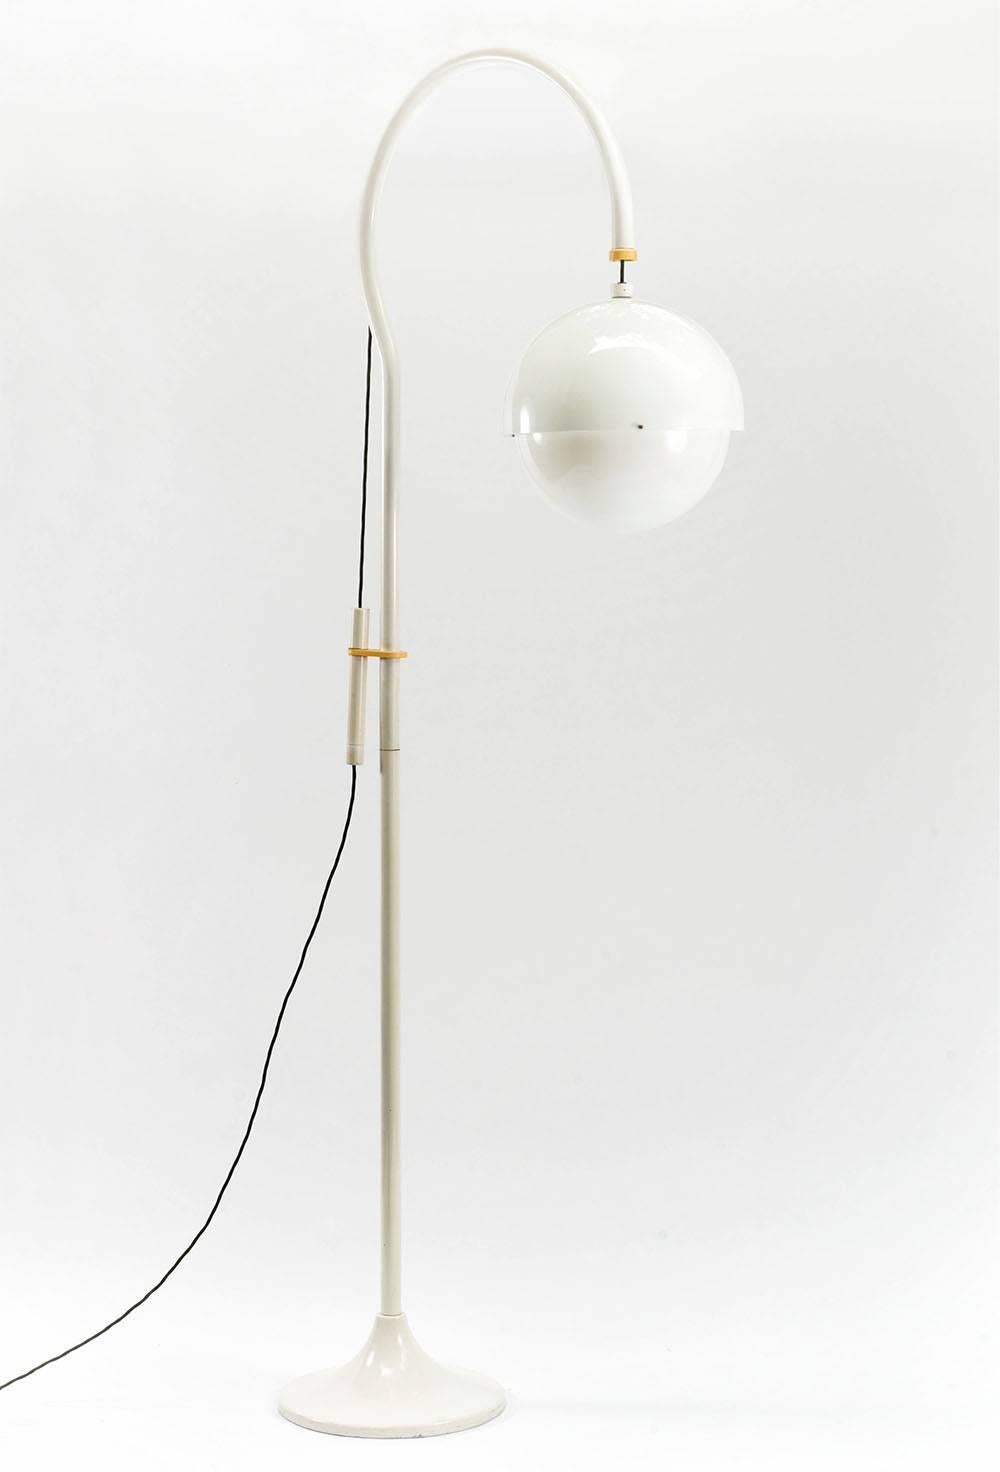 Rare floor lamp mod. ‘4055’ design Luigi Bandini Buti for Kartell 1965.
Structure in tubular lacquered metal, plexiglass lampshade.
Latch mechanism for adjusting.
Original electrical system.